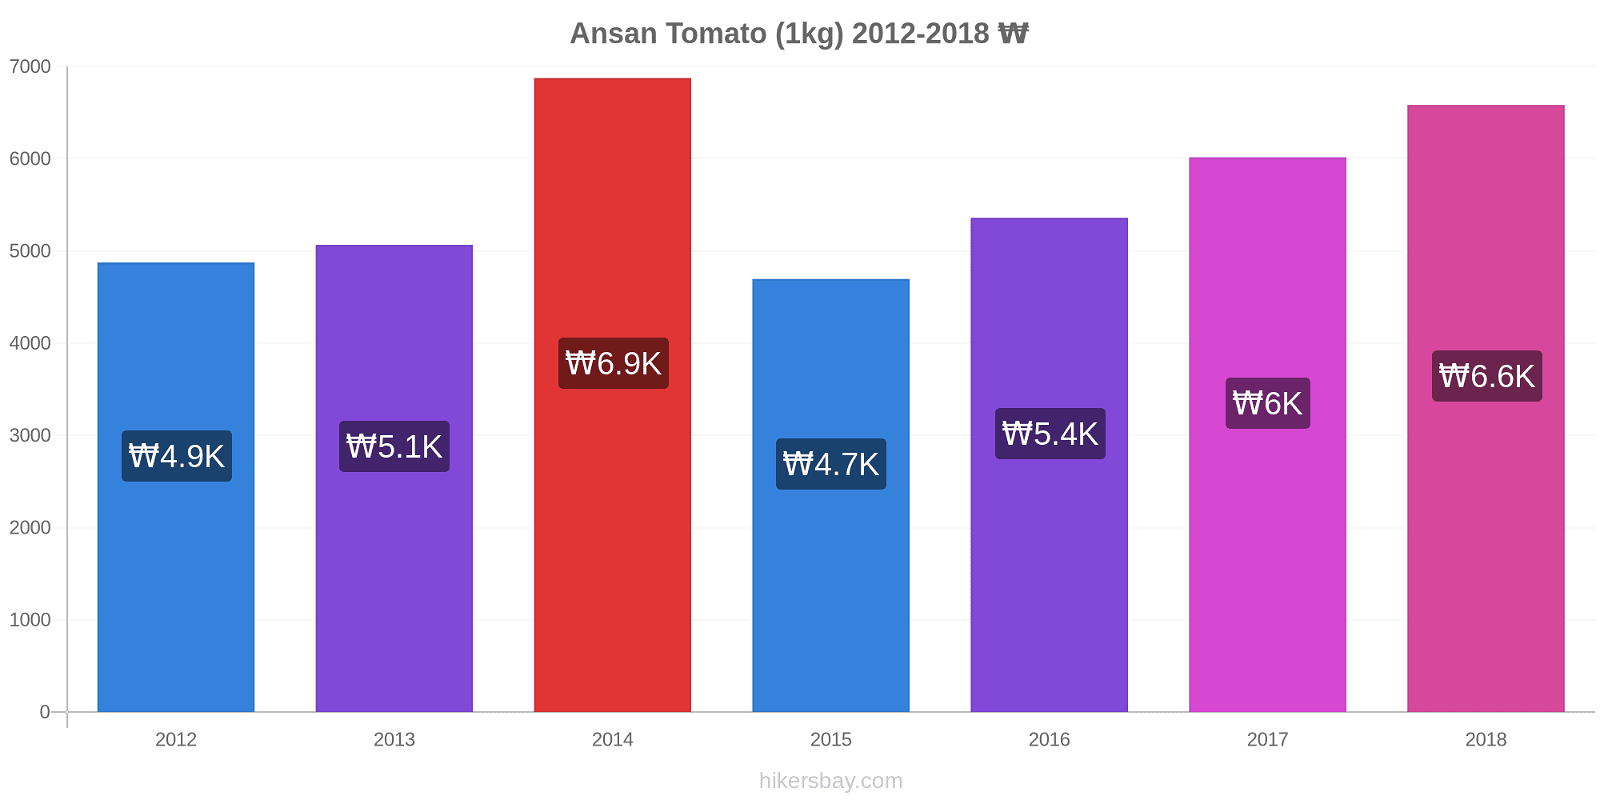 Ansan price changes Tomato (1kg) hikersbay.com